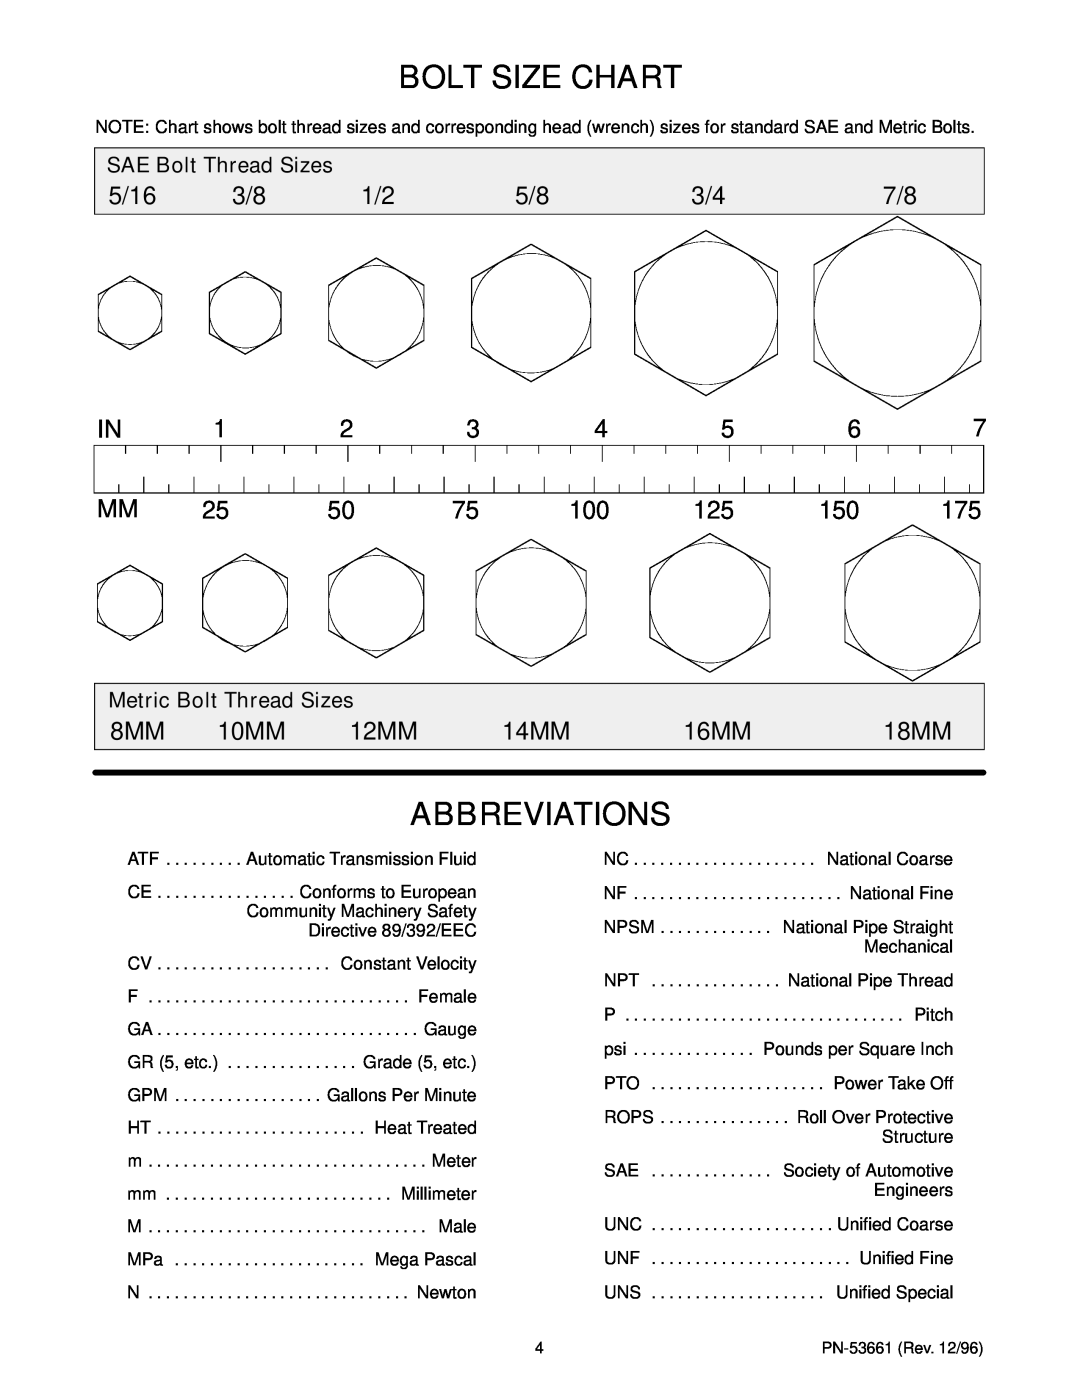 Woods Equipment 111307, 199758, 118460 installation instructions Bolt Size Chart, Abbreviations 